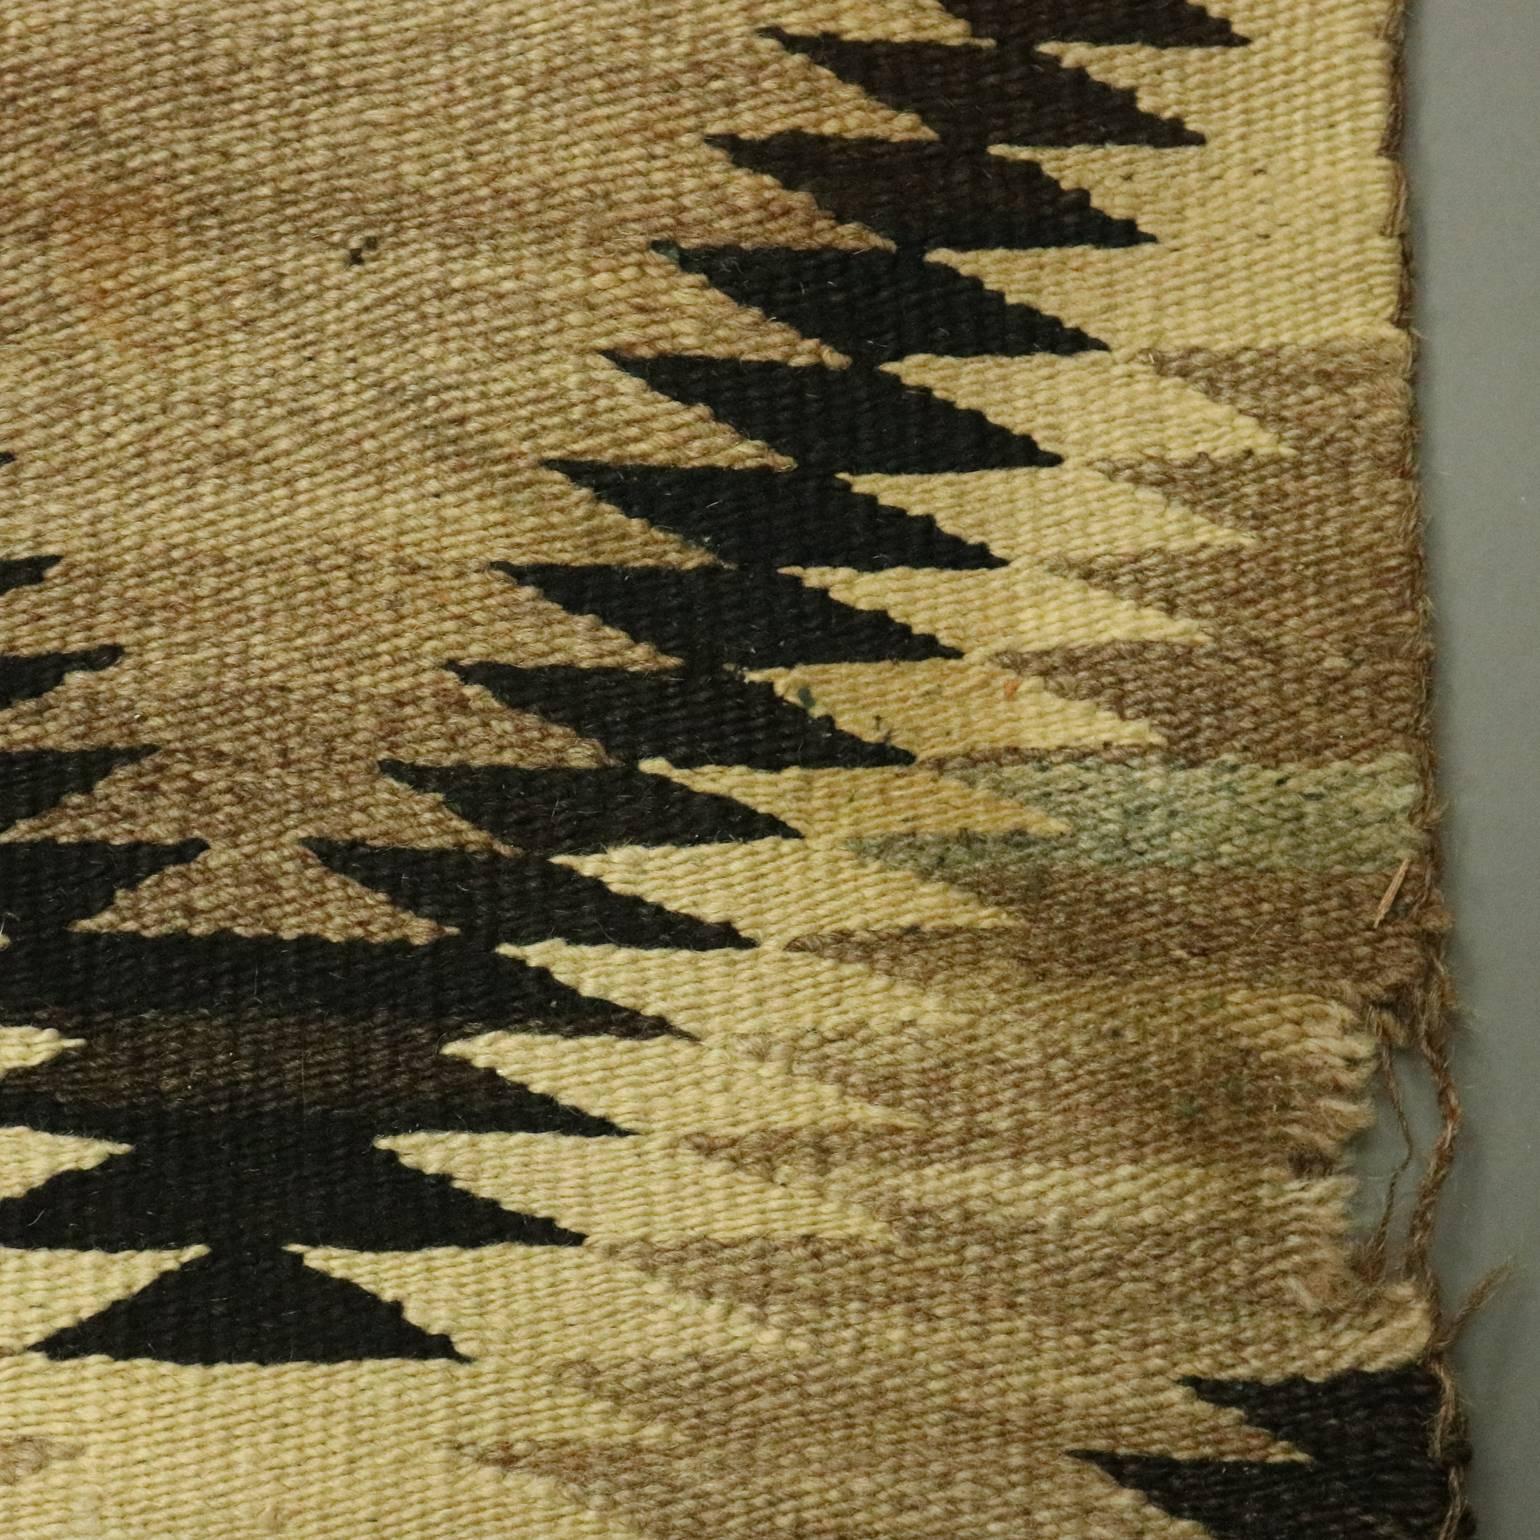 Antique handwoven Native American Indian eye dazzler wool rug, circa 1900

Measures: 41" x 28".